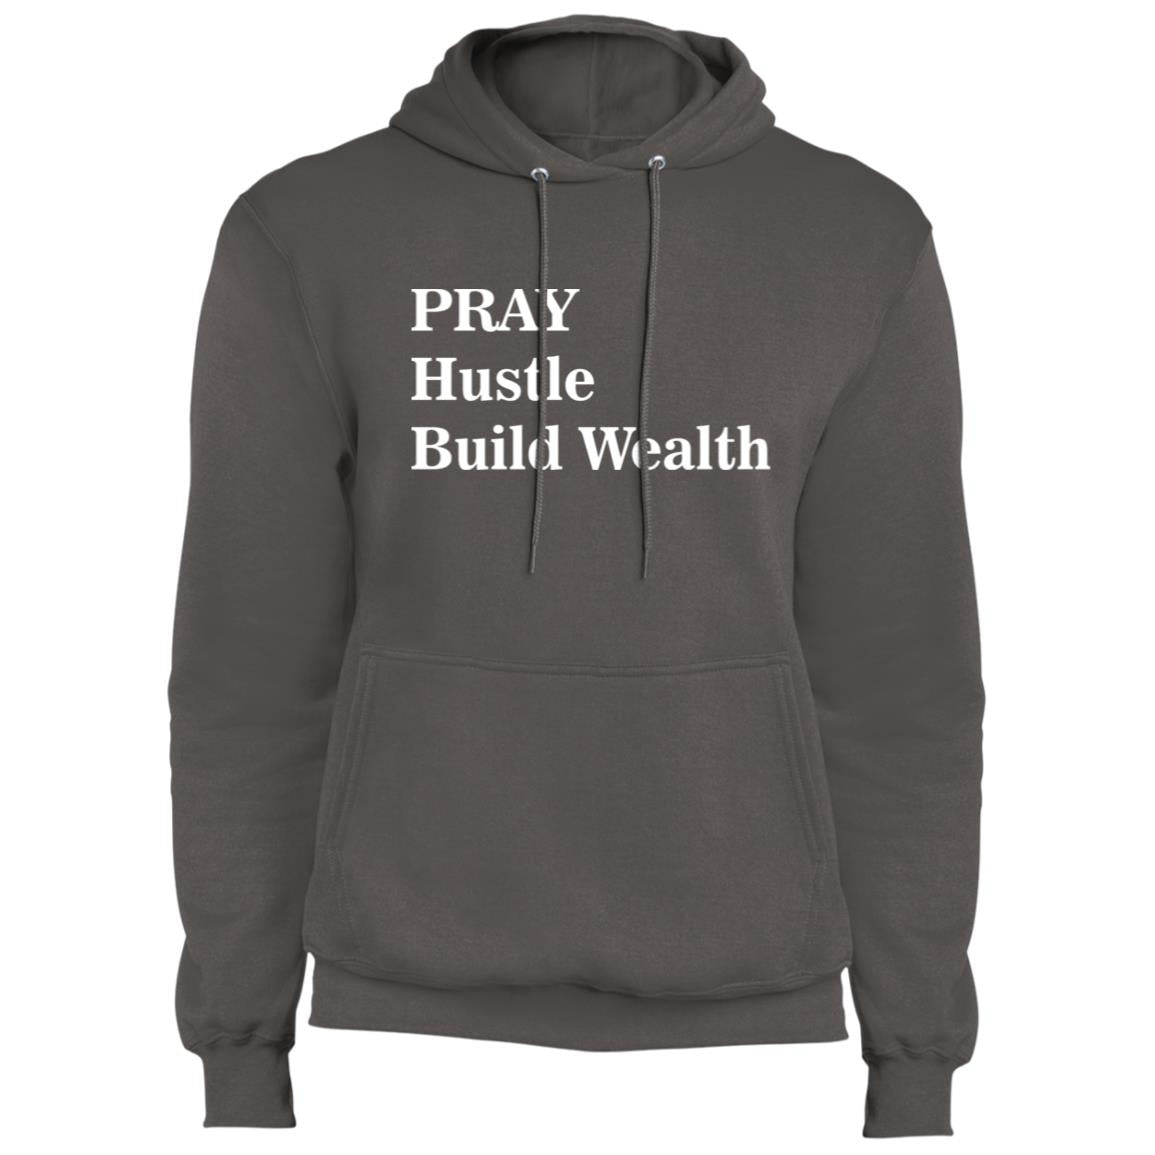 PRAY Hustle Build Wealth - Fleece Pullover Hoodie